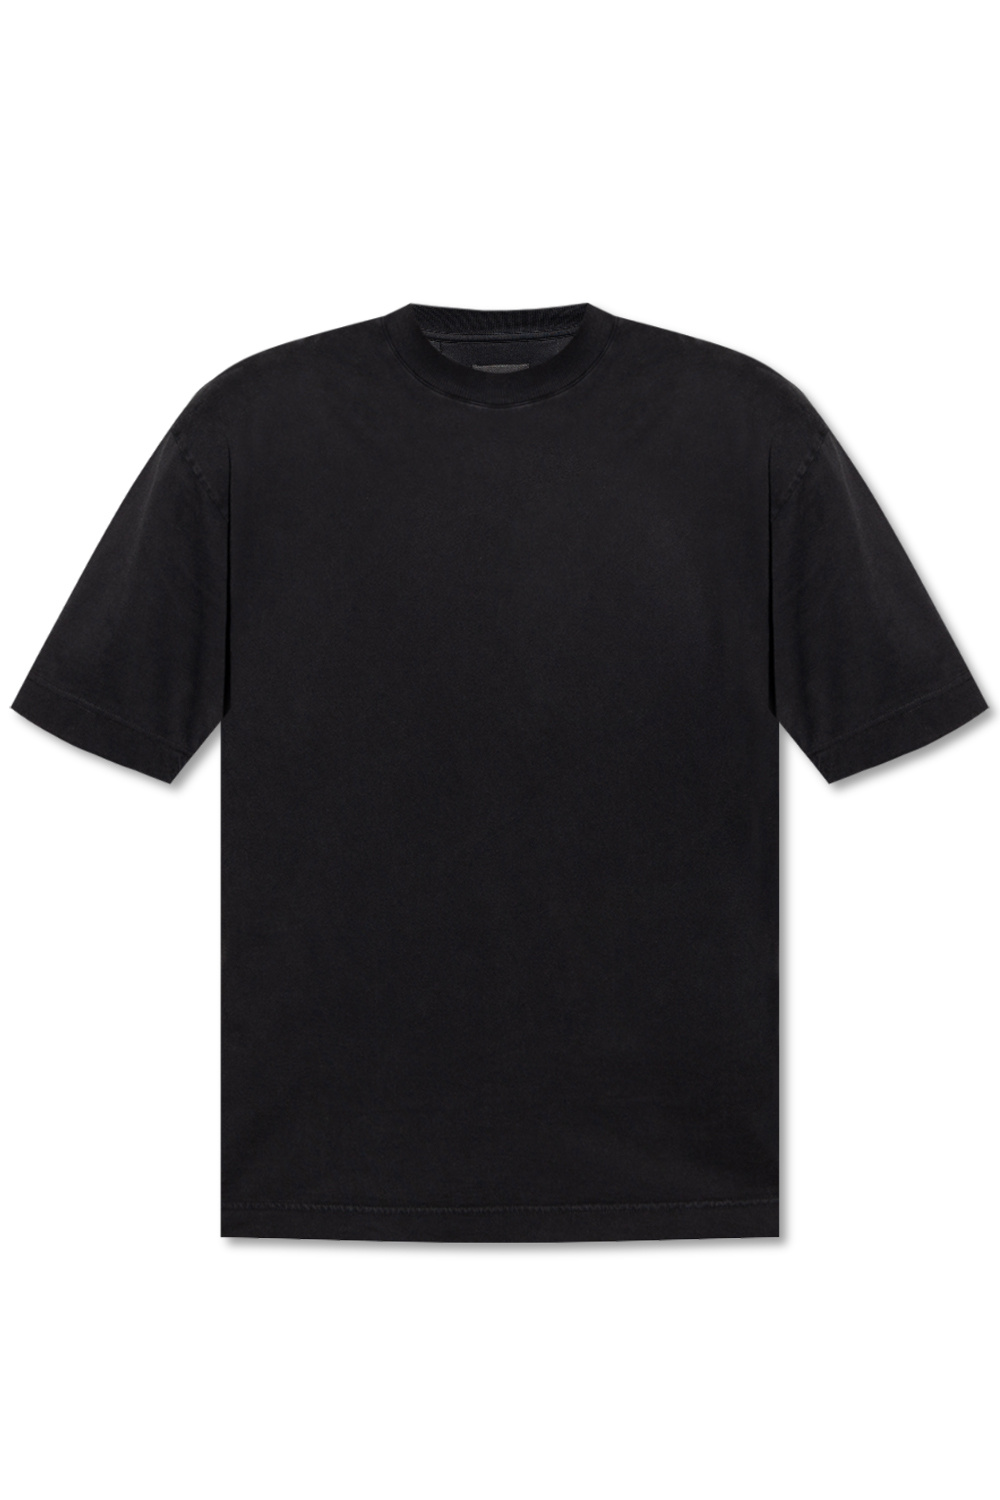 Givenchy Cotton T-shirt | Men's Clothing | IetpShops